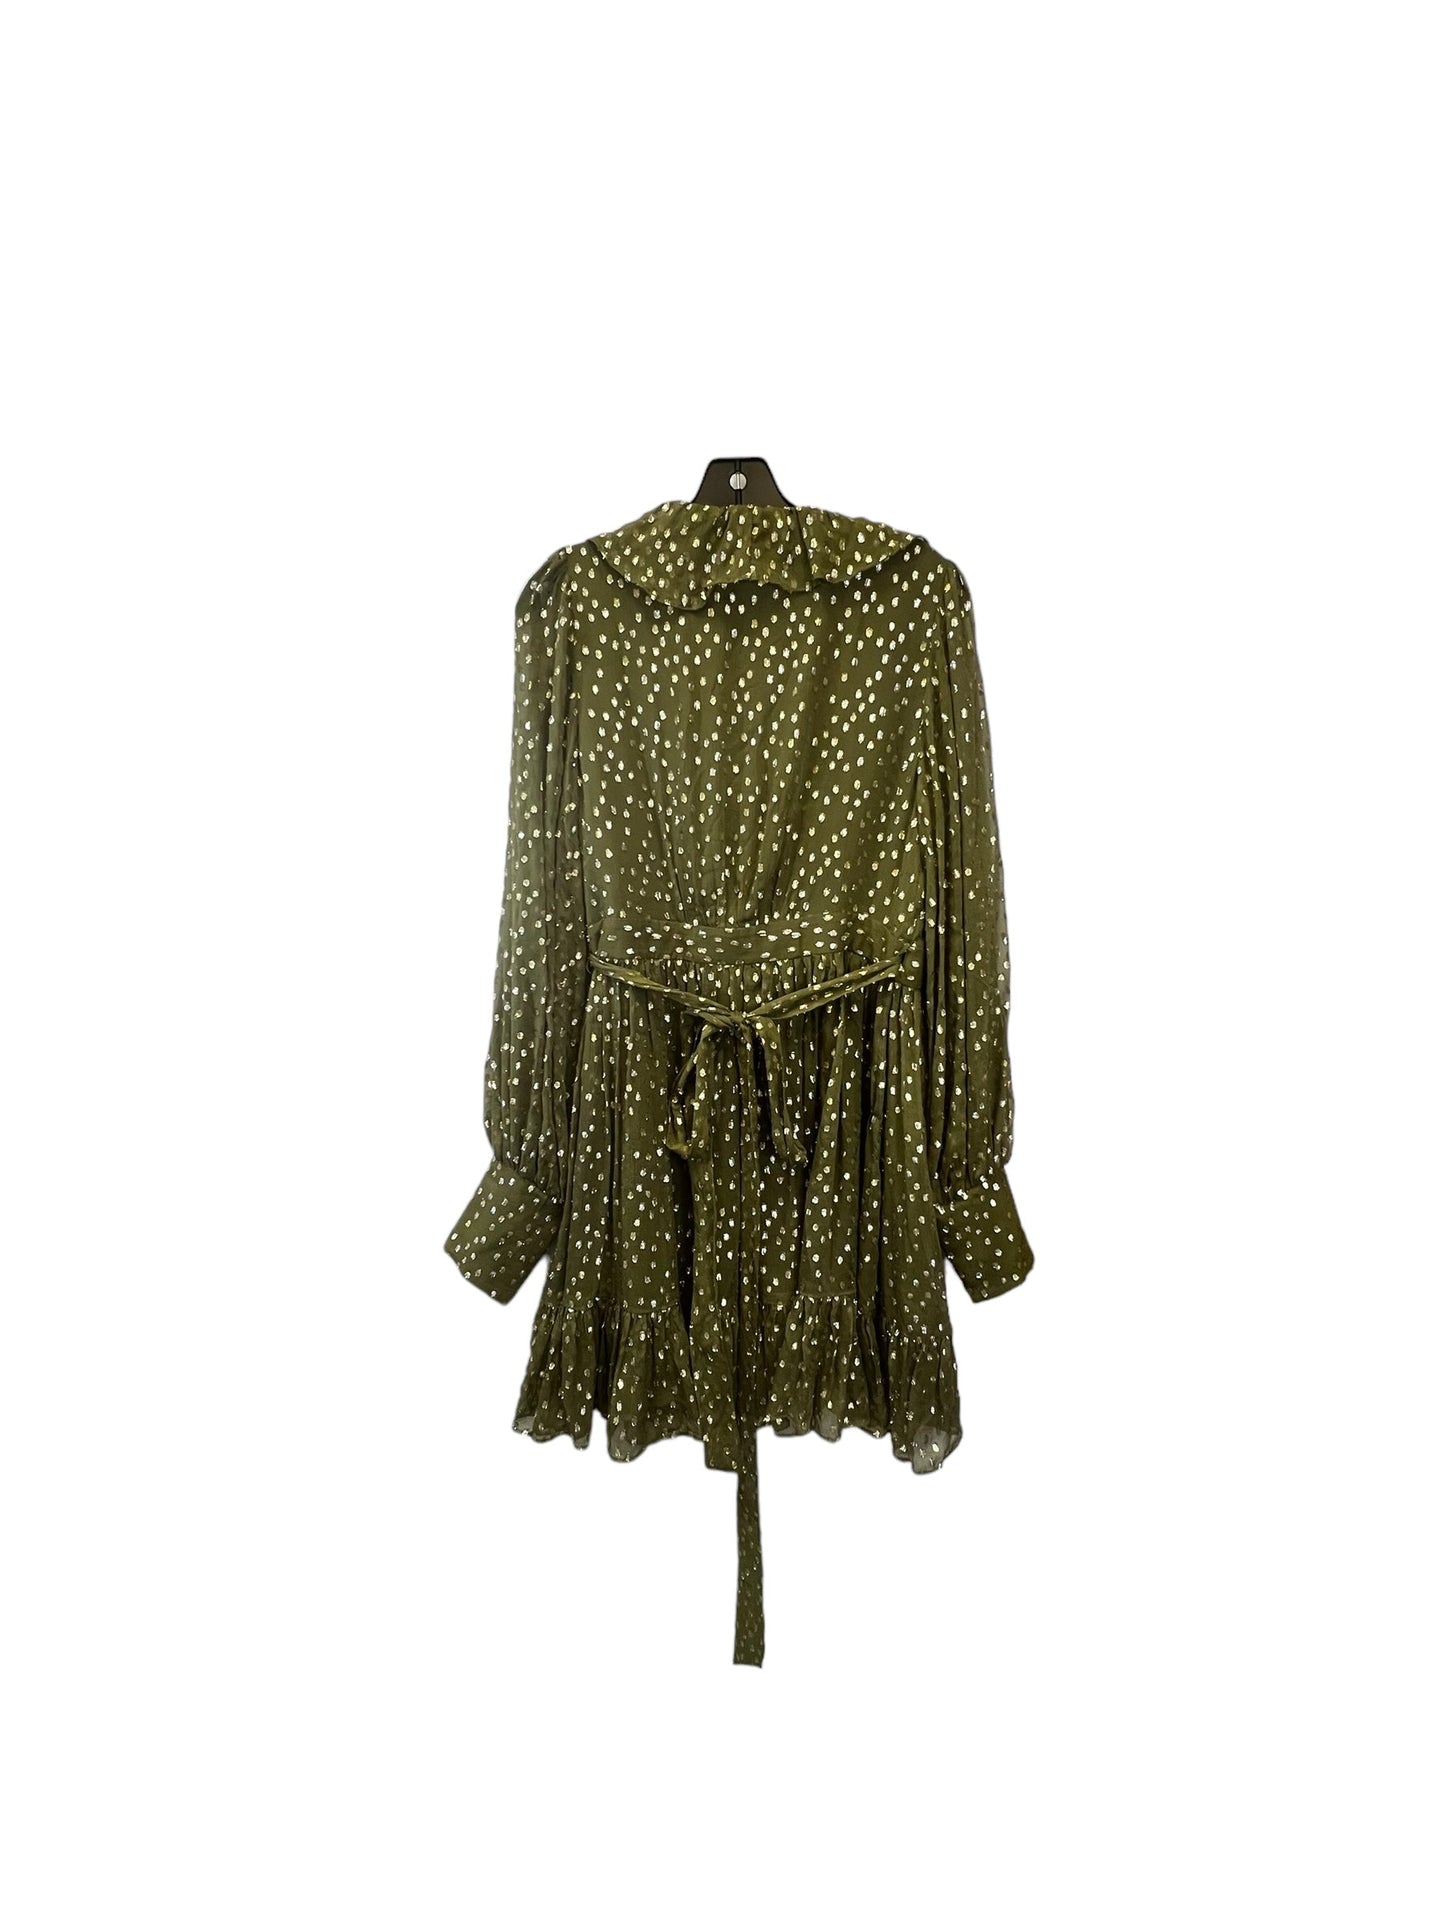 Gold & Green Dress Designer Zimmermann, Size S